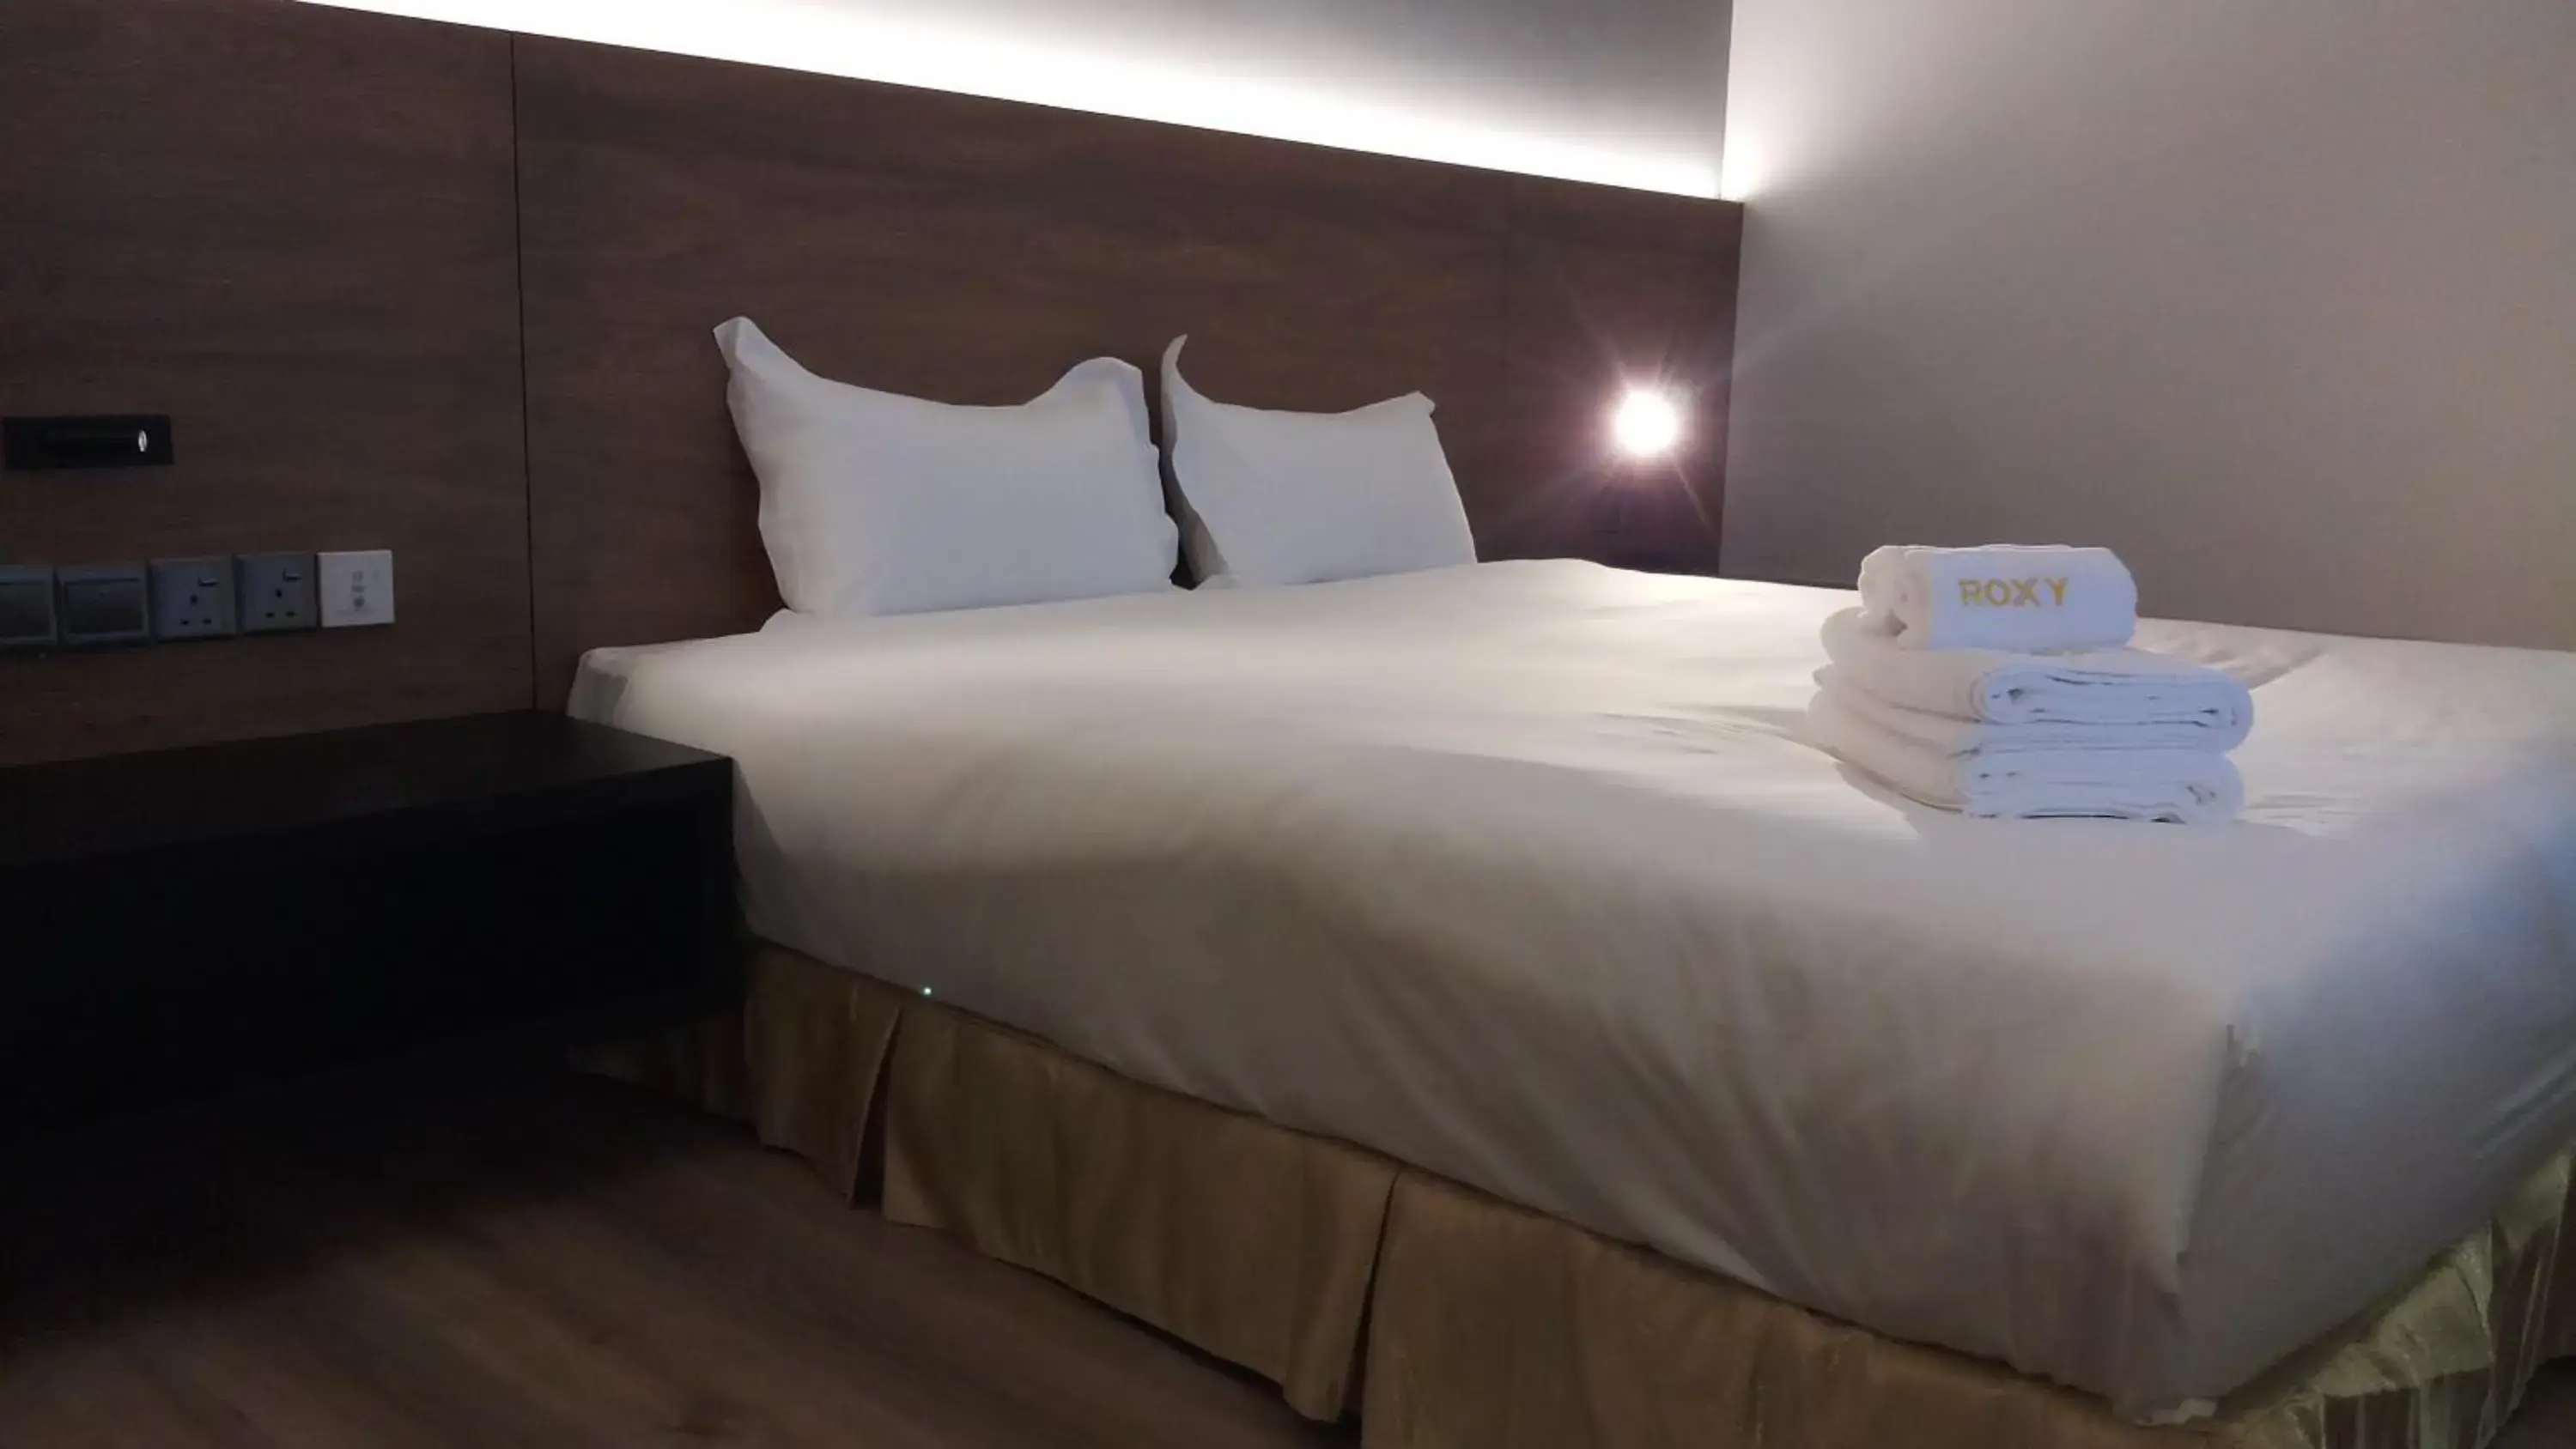 Bedroom, Bed in Roxy Hotel Padungan